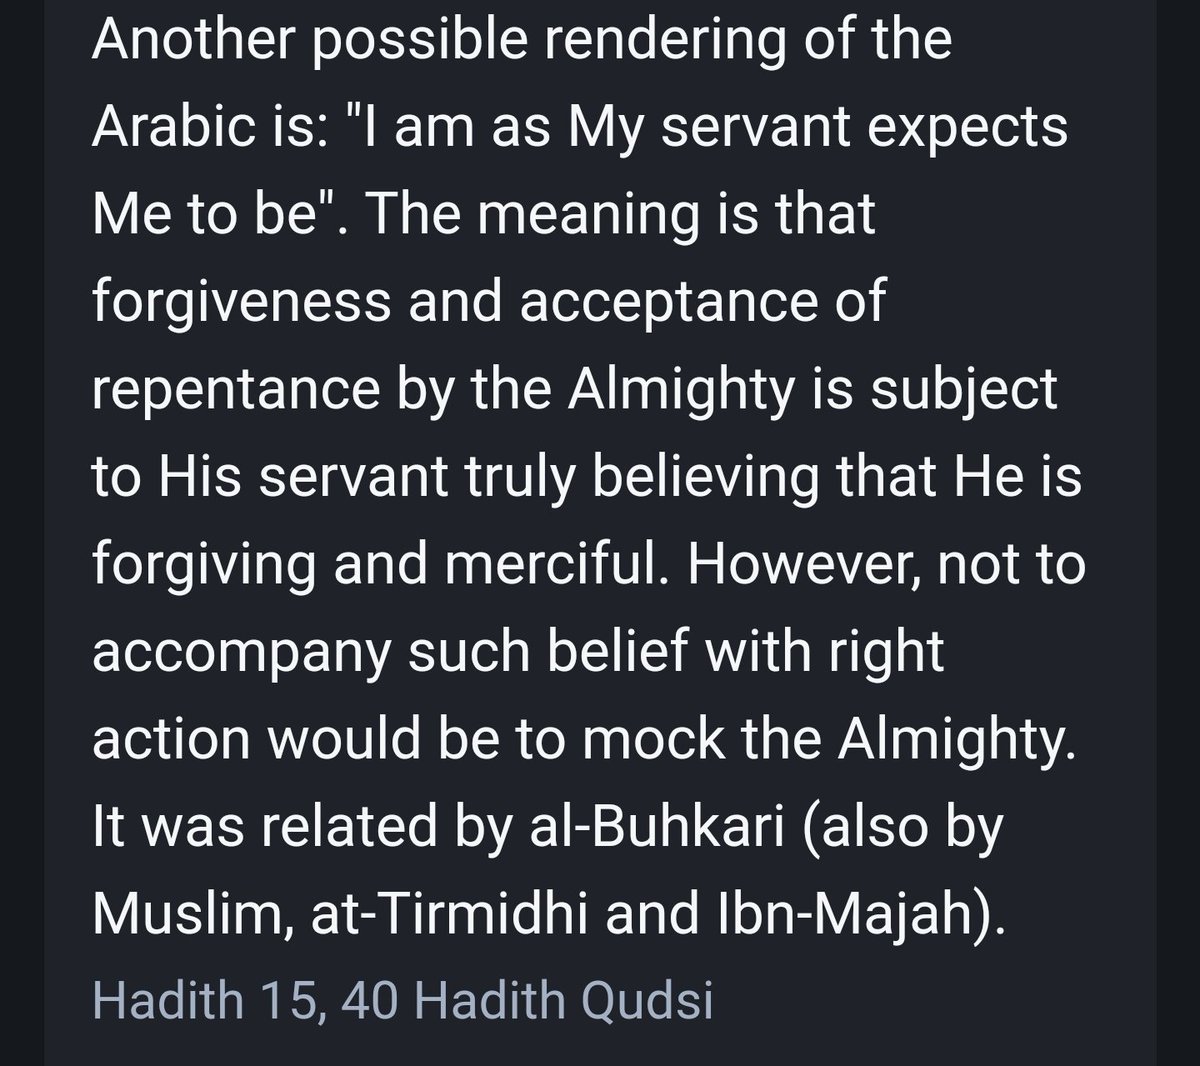 This hadith ❤️❤️